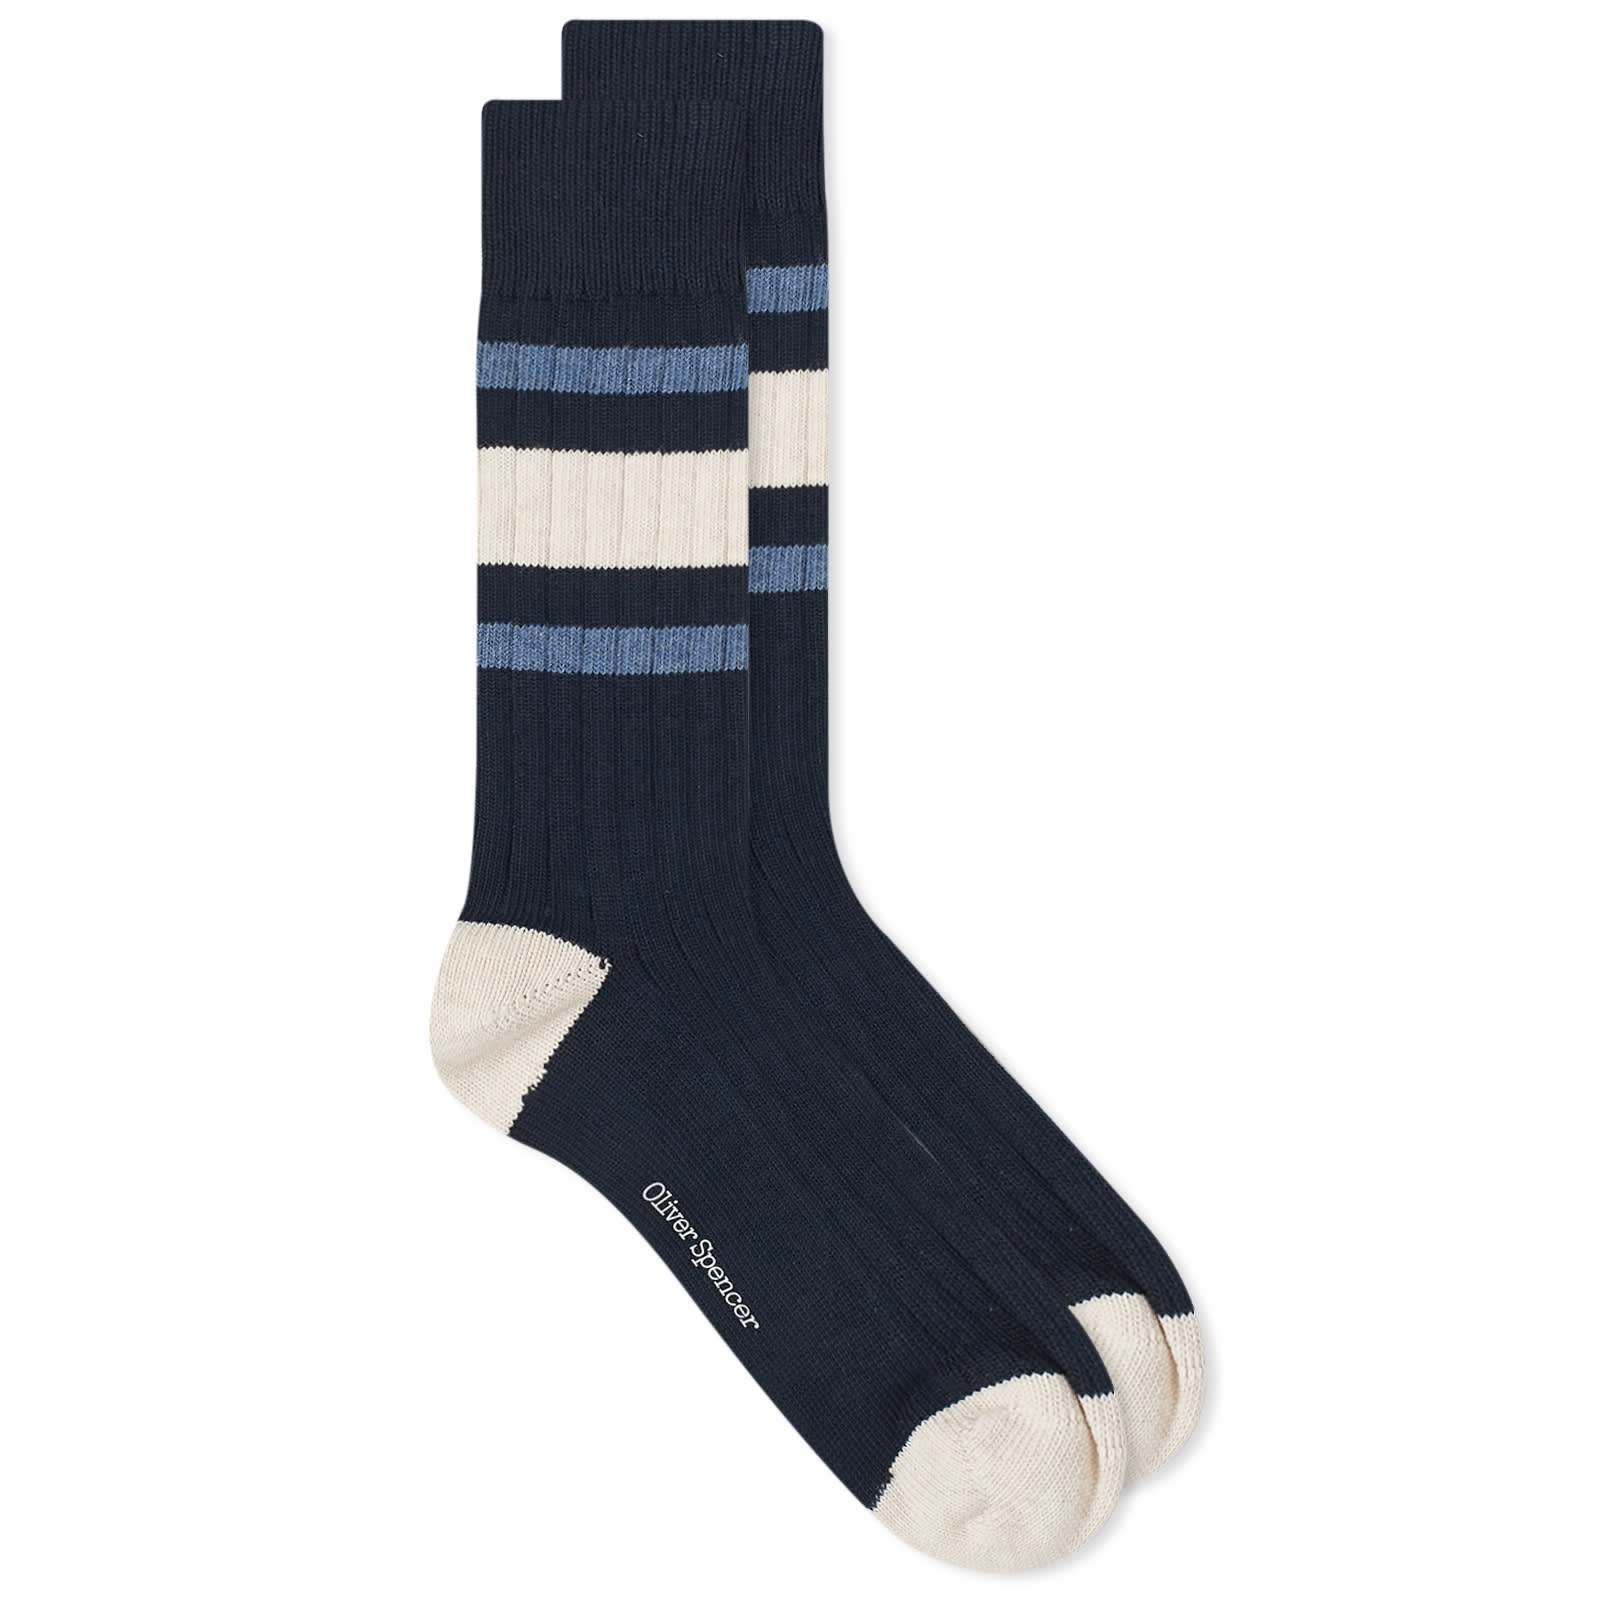 Oliver Spencer Polperro Socks - 1